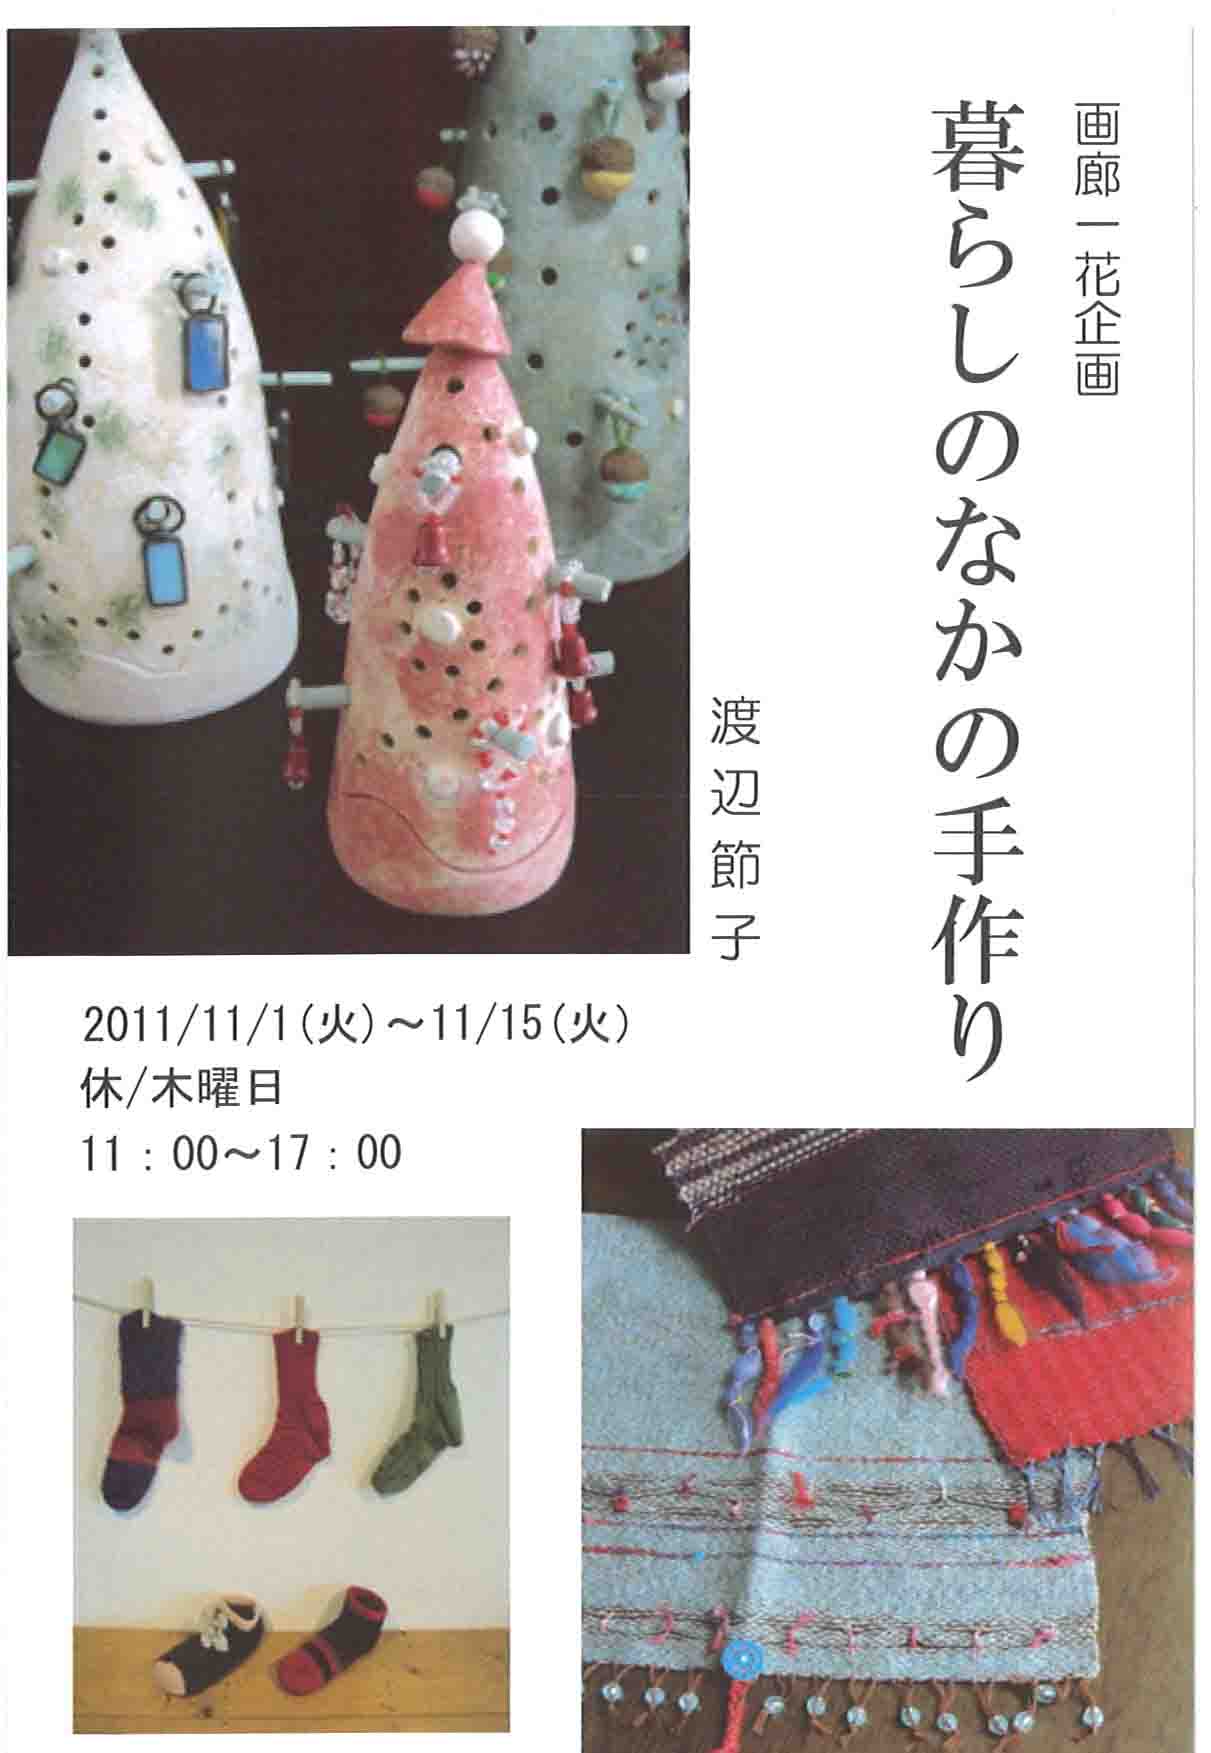 http://www.hakomachi.com/townnews/images/20111020142648_00001-1.jpg